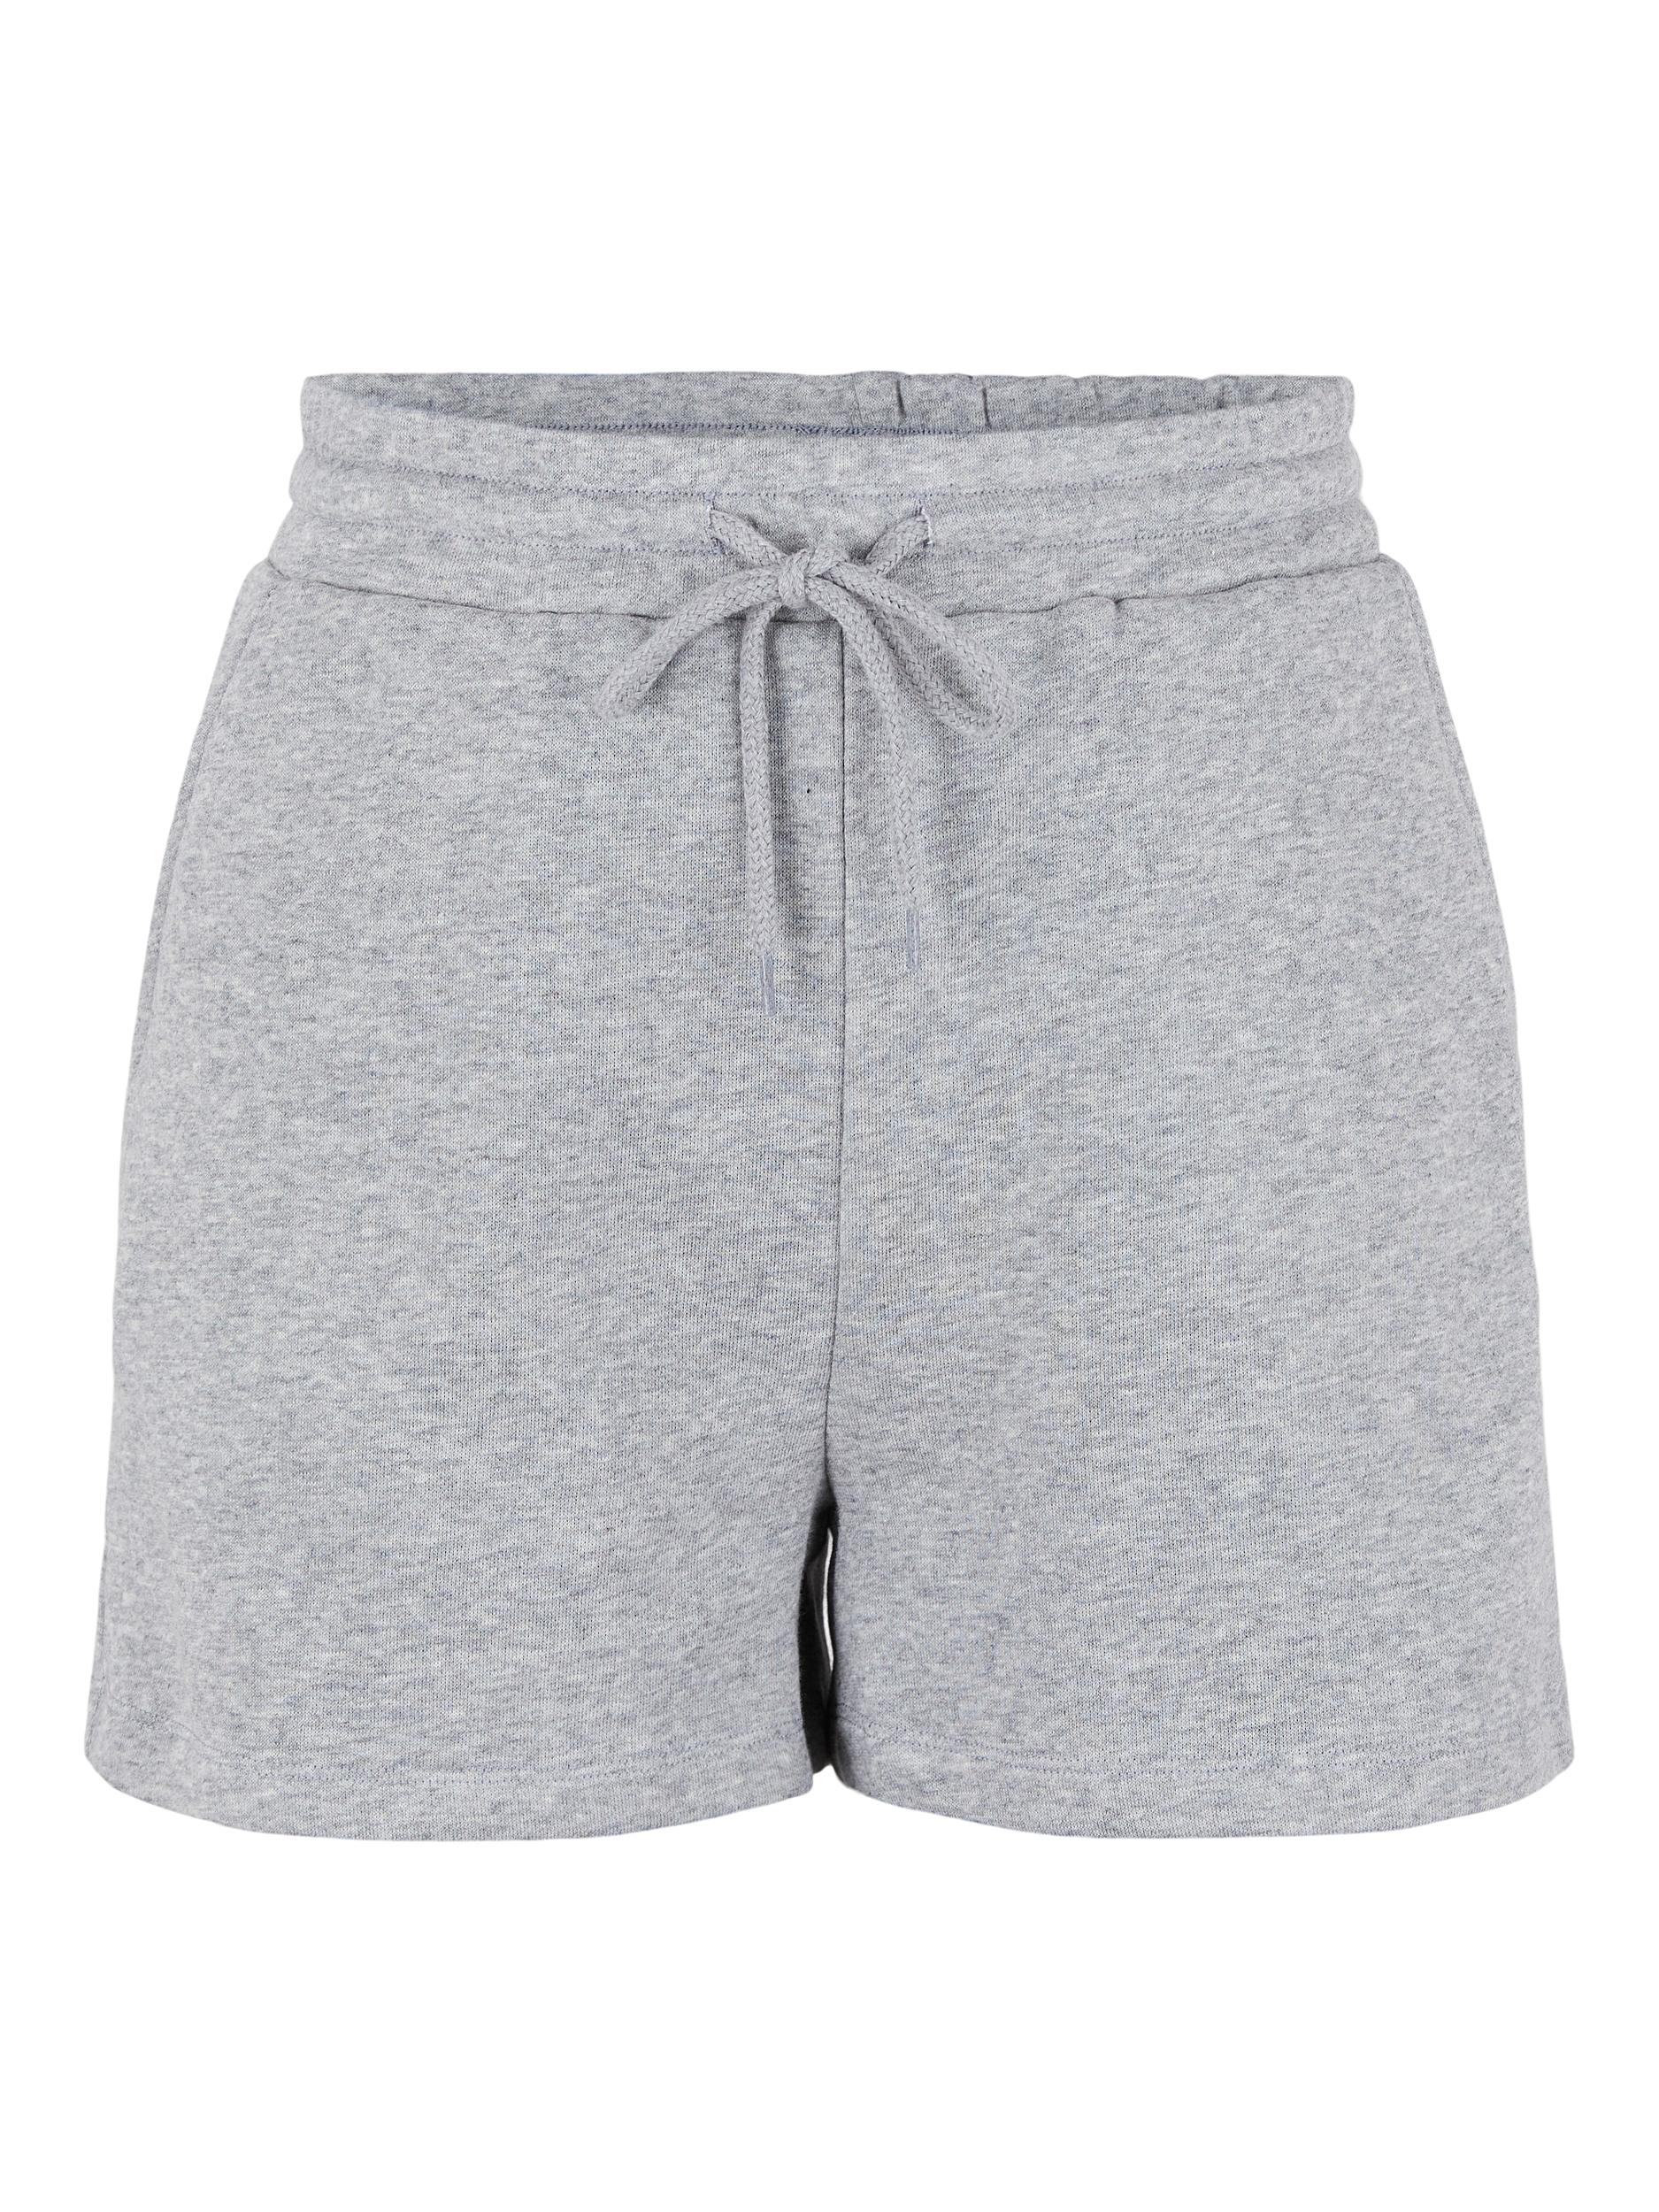 Pieces Chilli Summer shorts - medium grey